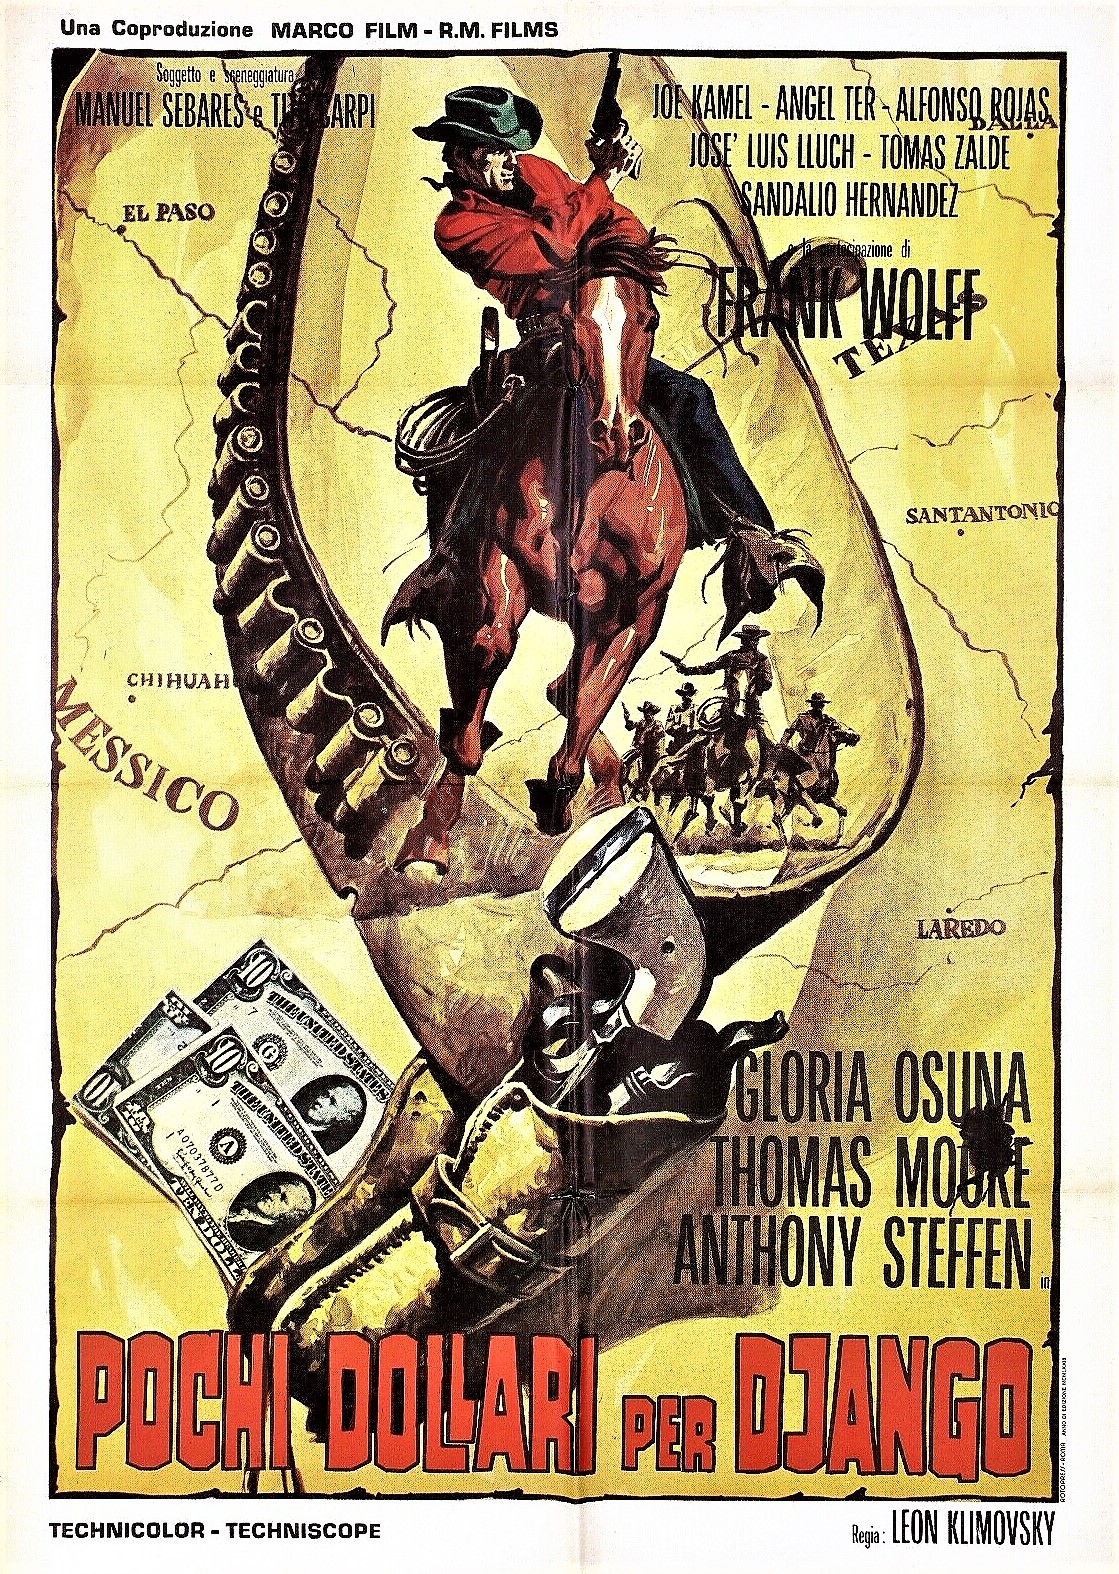 Some Dollars for Django movie poster